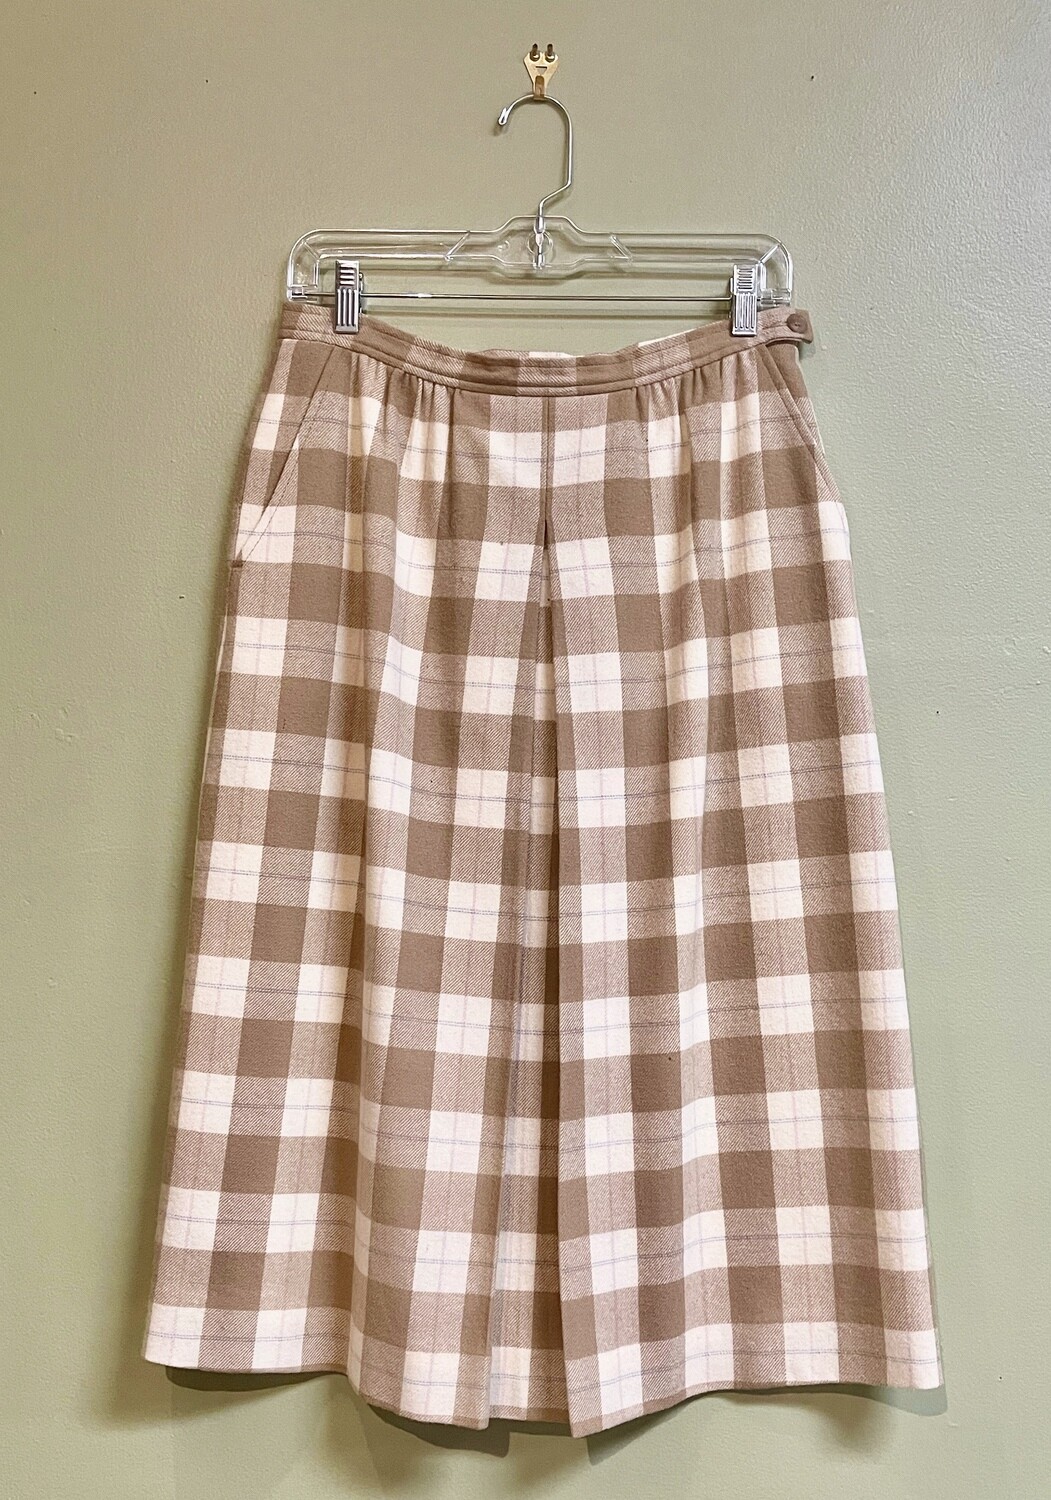 Taupe Pendleton Skirt, Size 14 